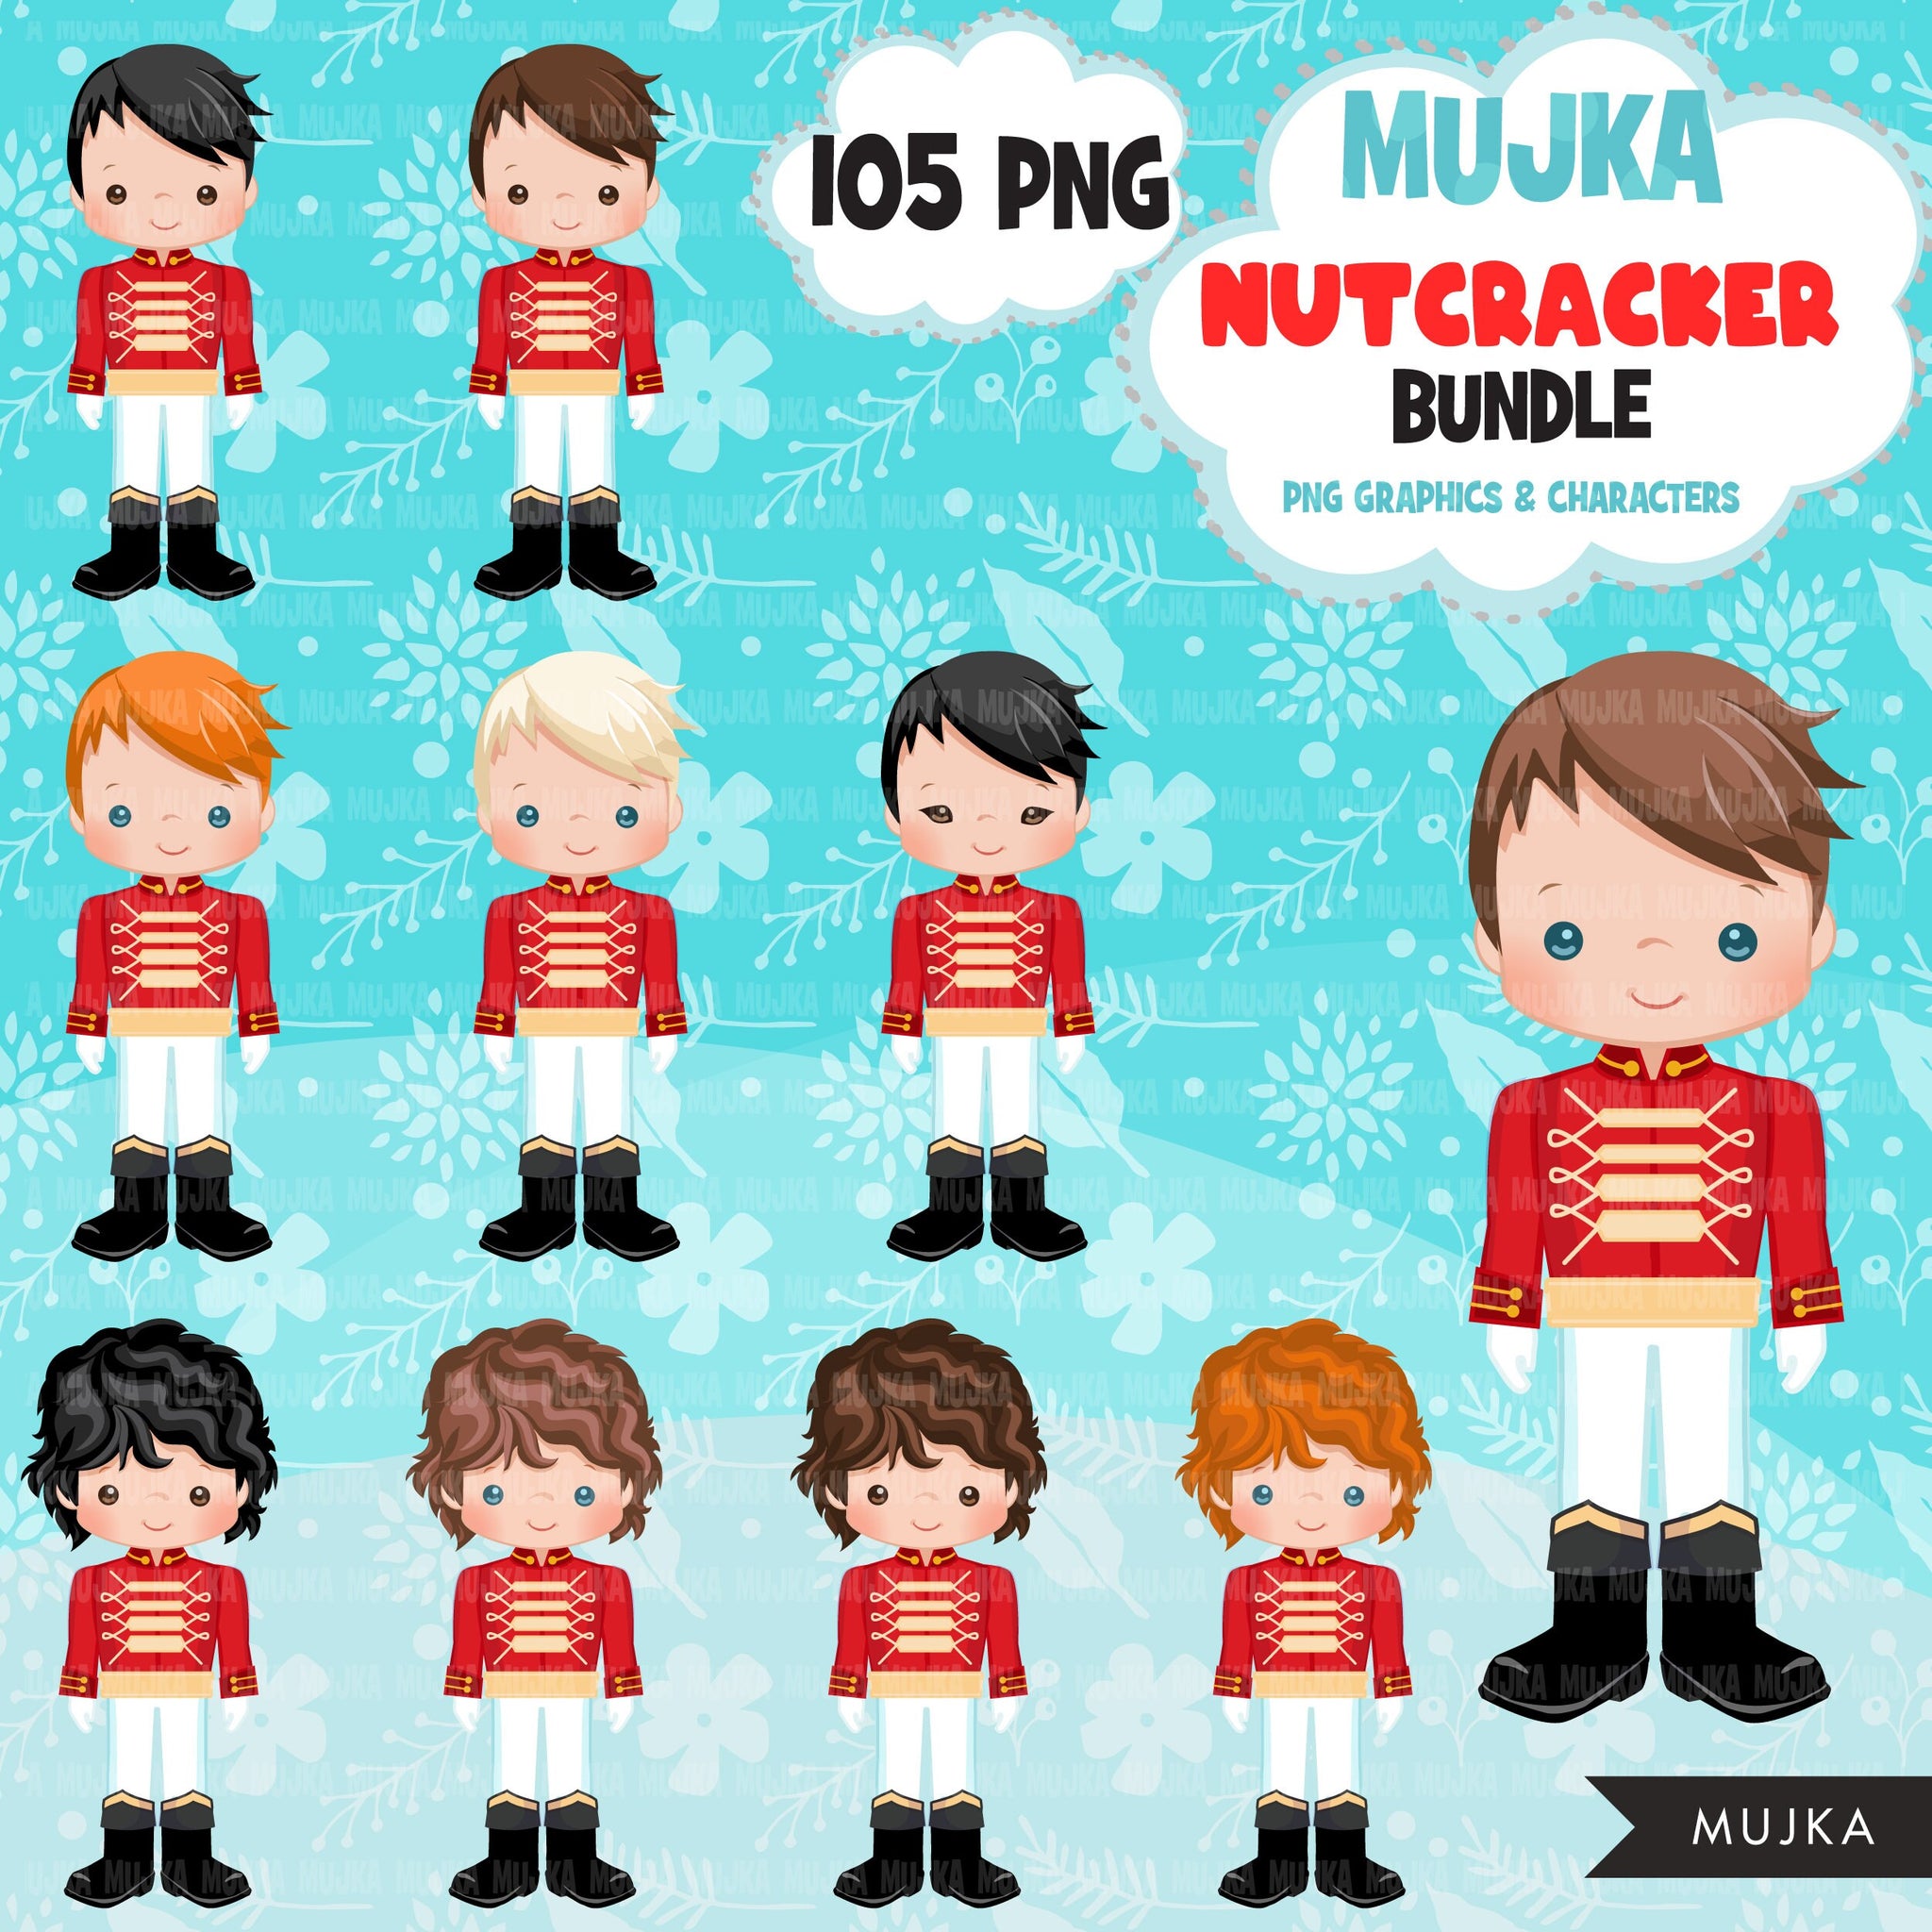 Nutcracker PNG, Nutcracker clipart Bundle, Christmas characters, Mouse King, Sugar Plum fairy, Clara png, Christmas ballet, toy soldiers